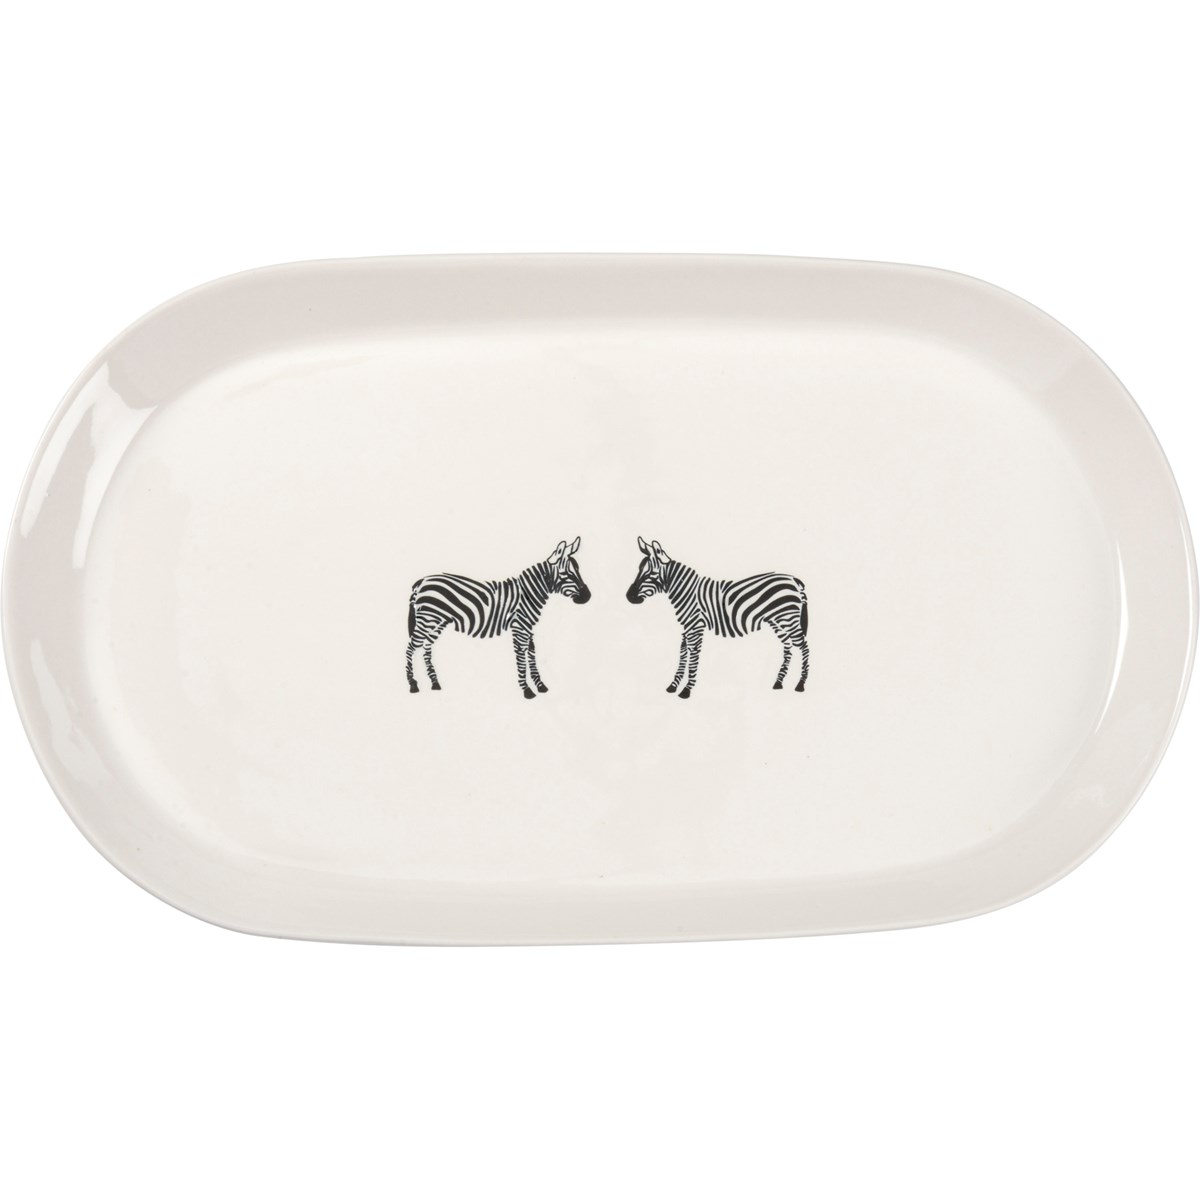 Platter Oval - Zebra - 15.75" x 8.75" x 1.50"  - Stoneware